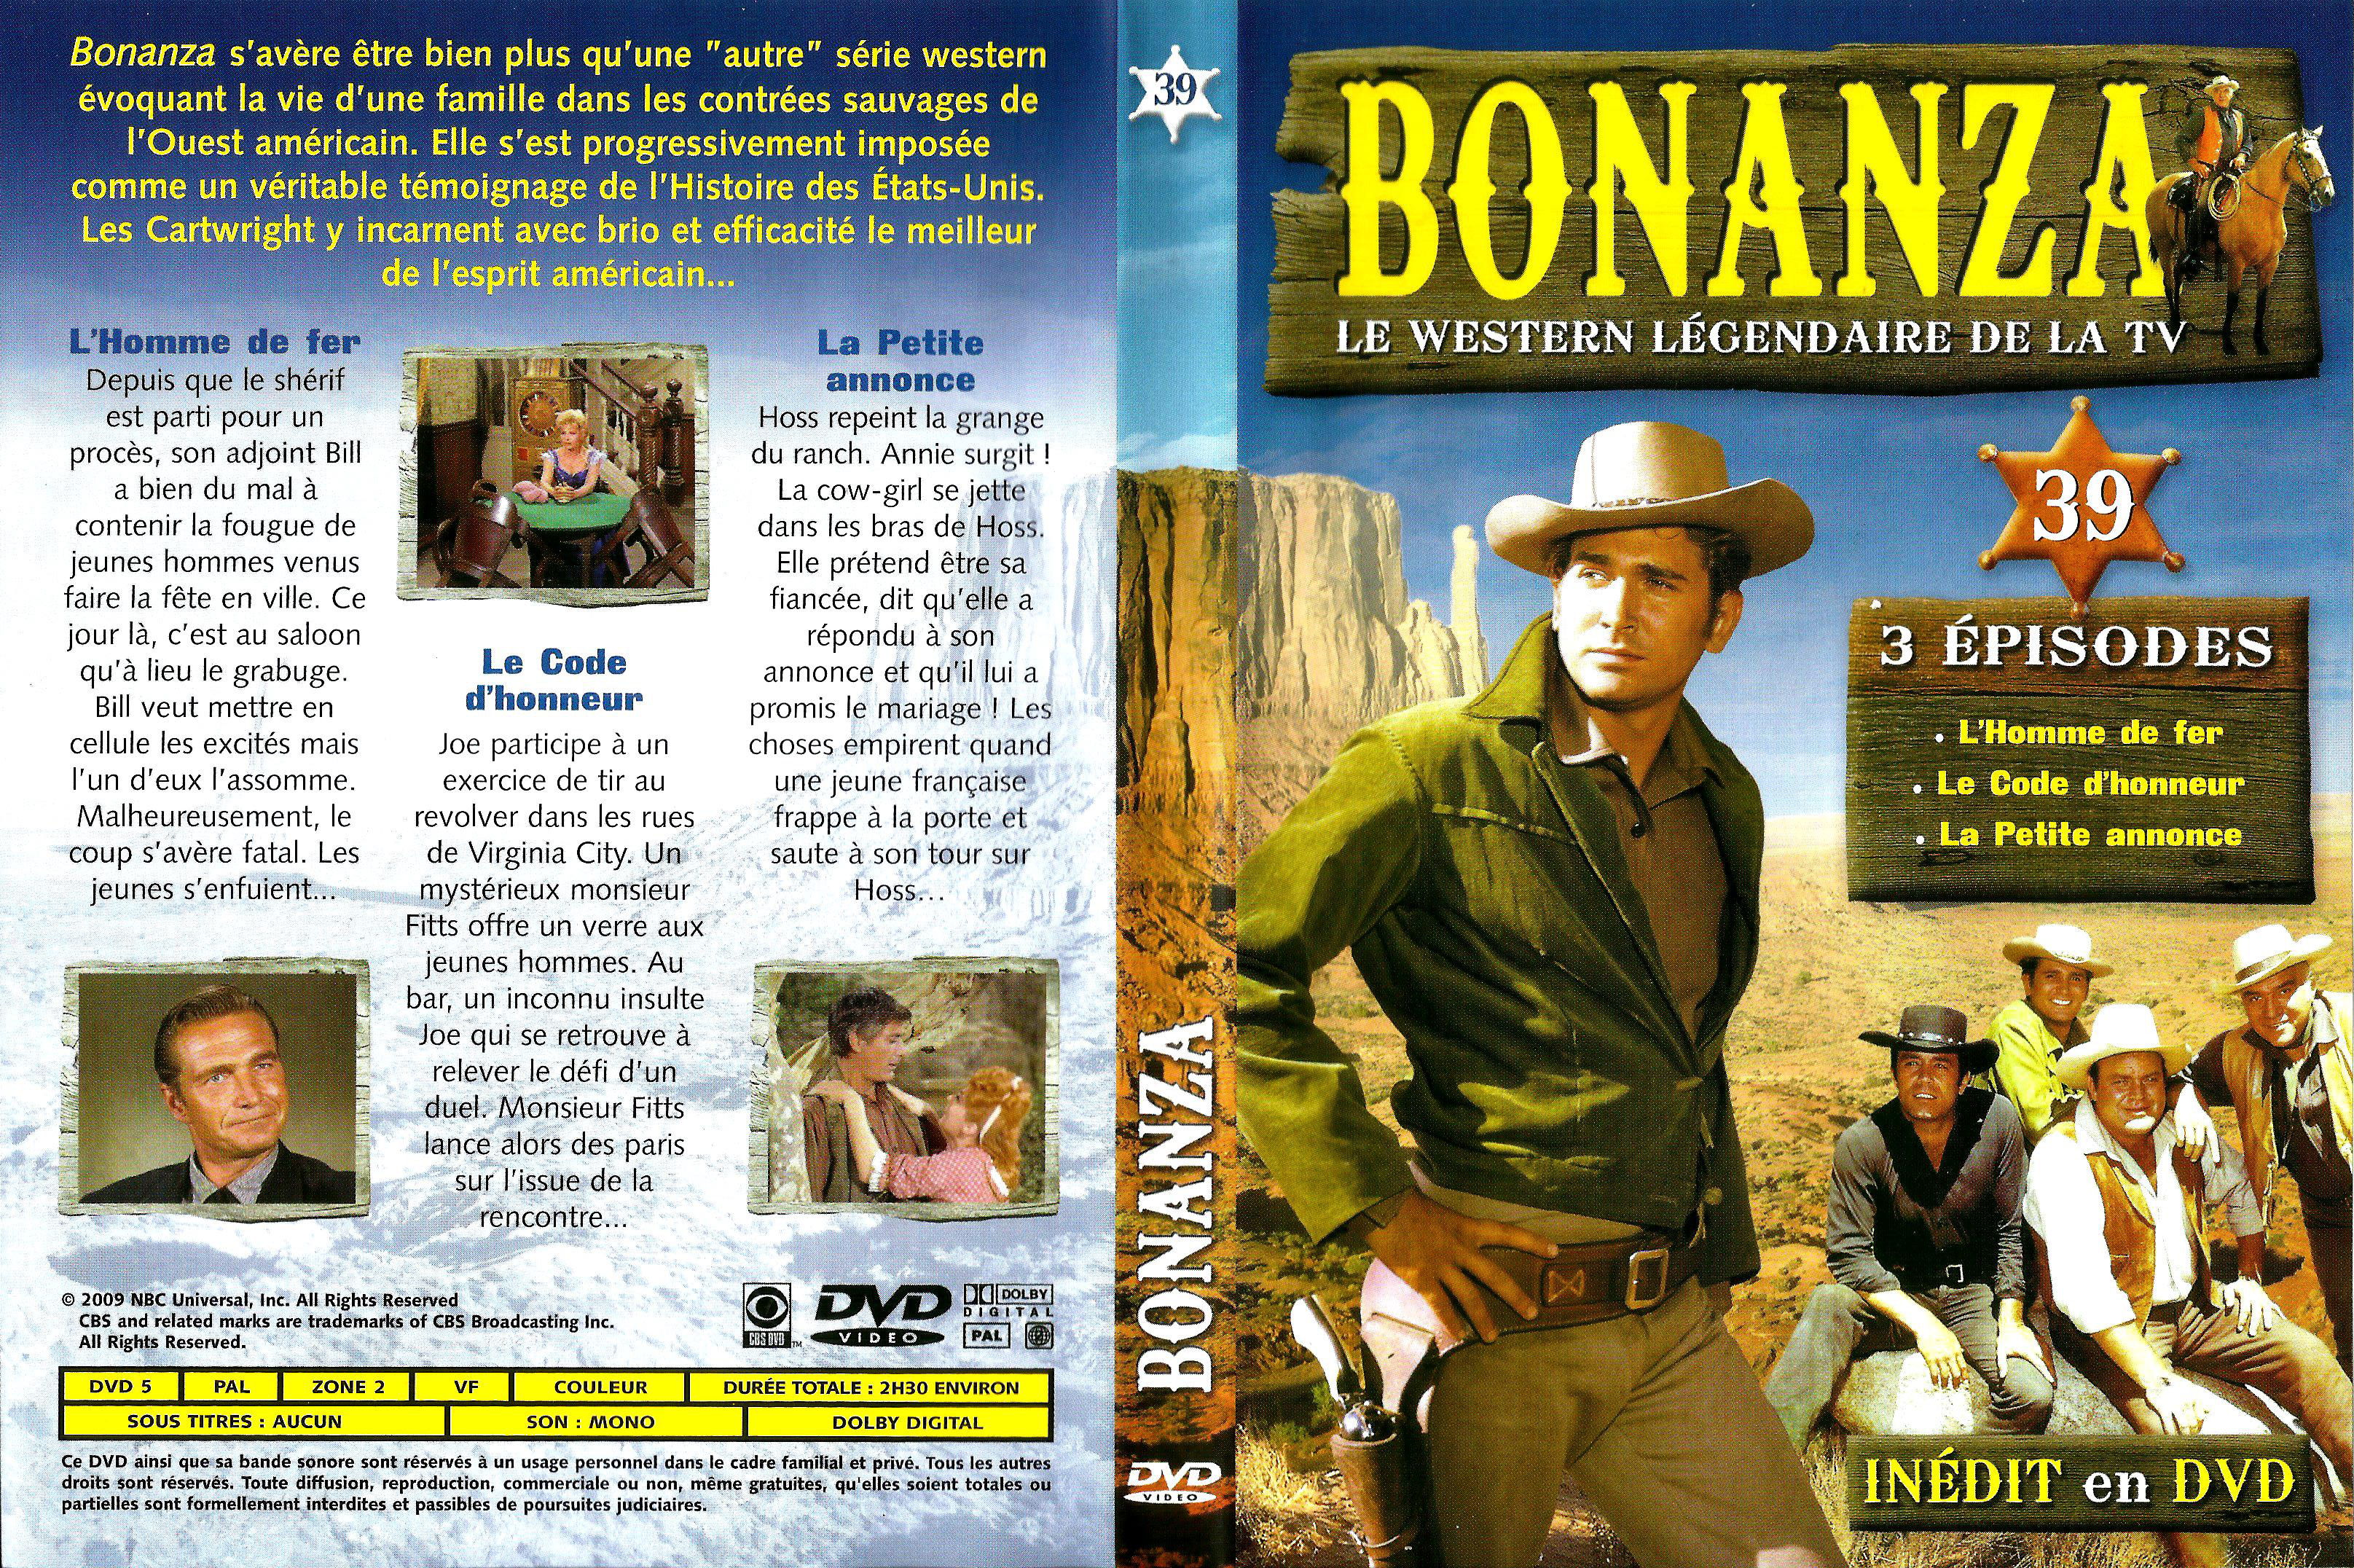 Jaquette DVD Bonanza vol 39